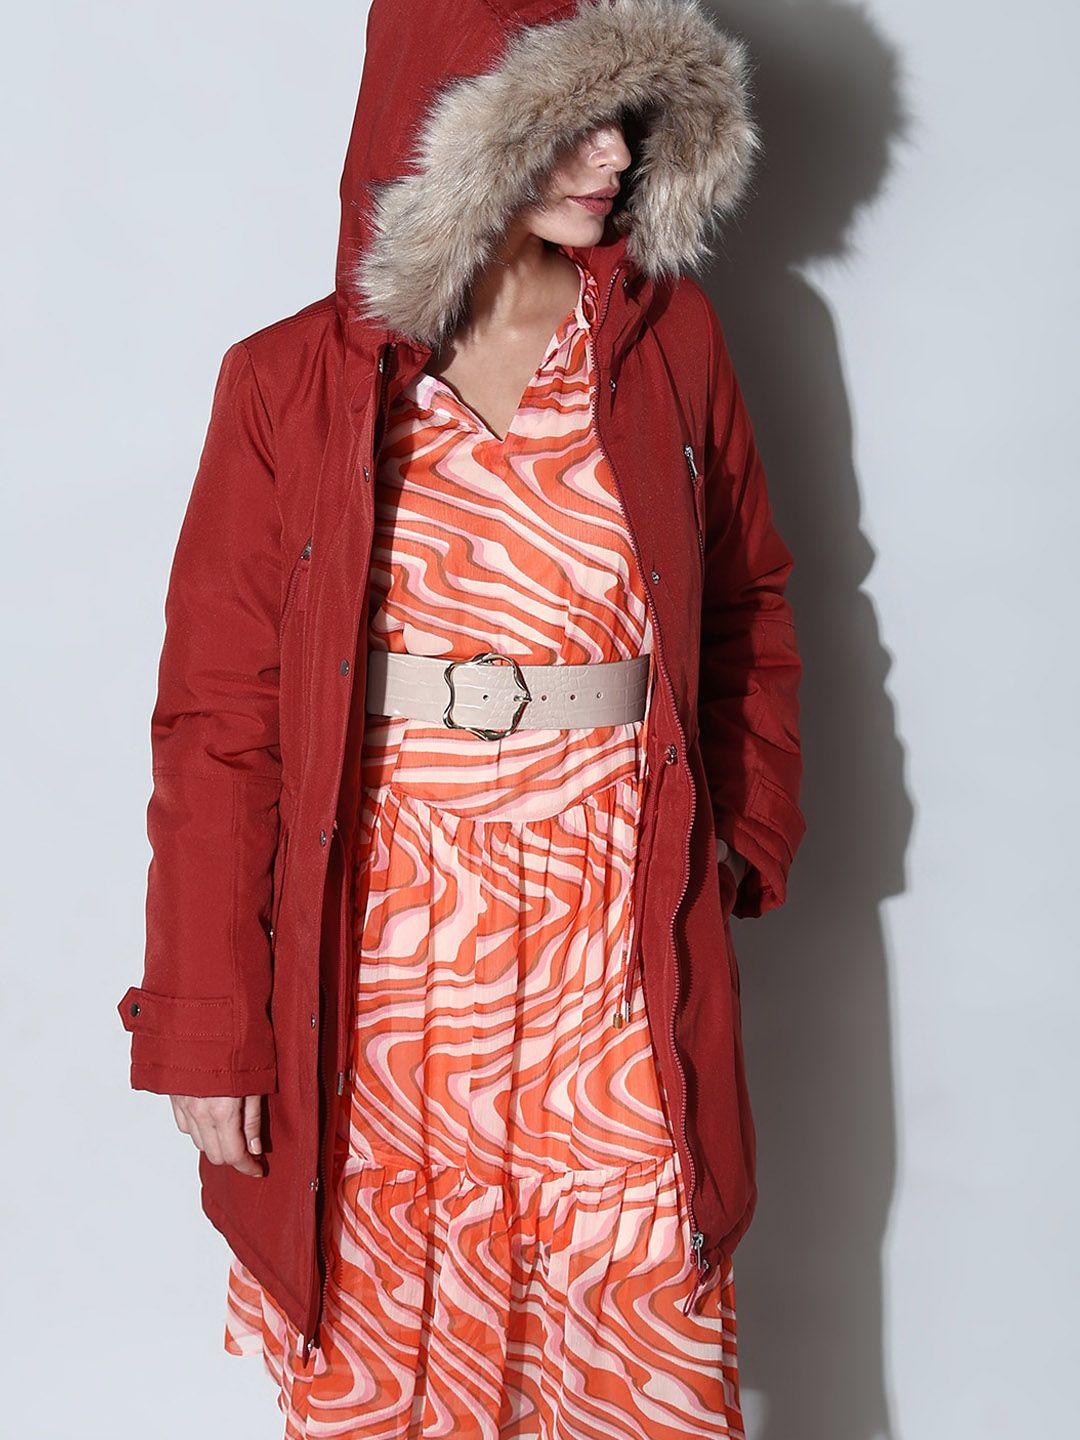 vero moda faux fur trim detail hooded longline parka jacket